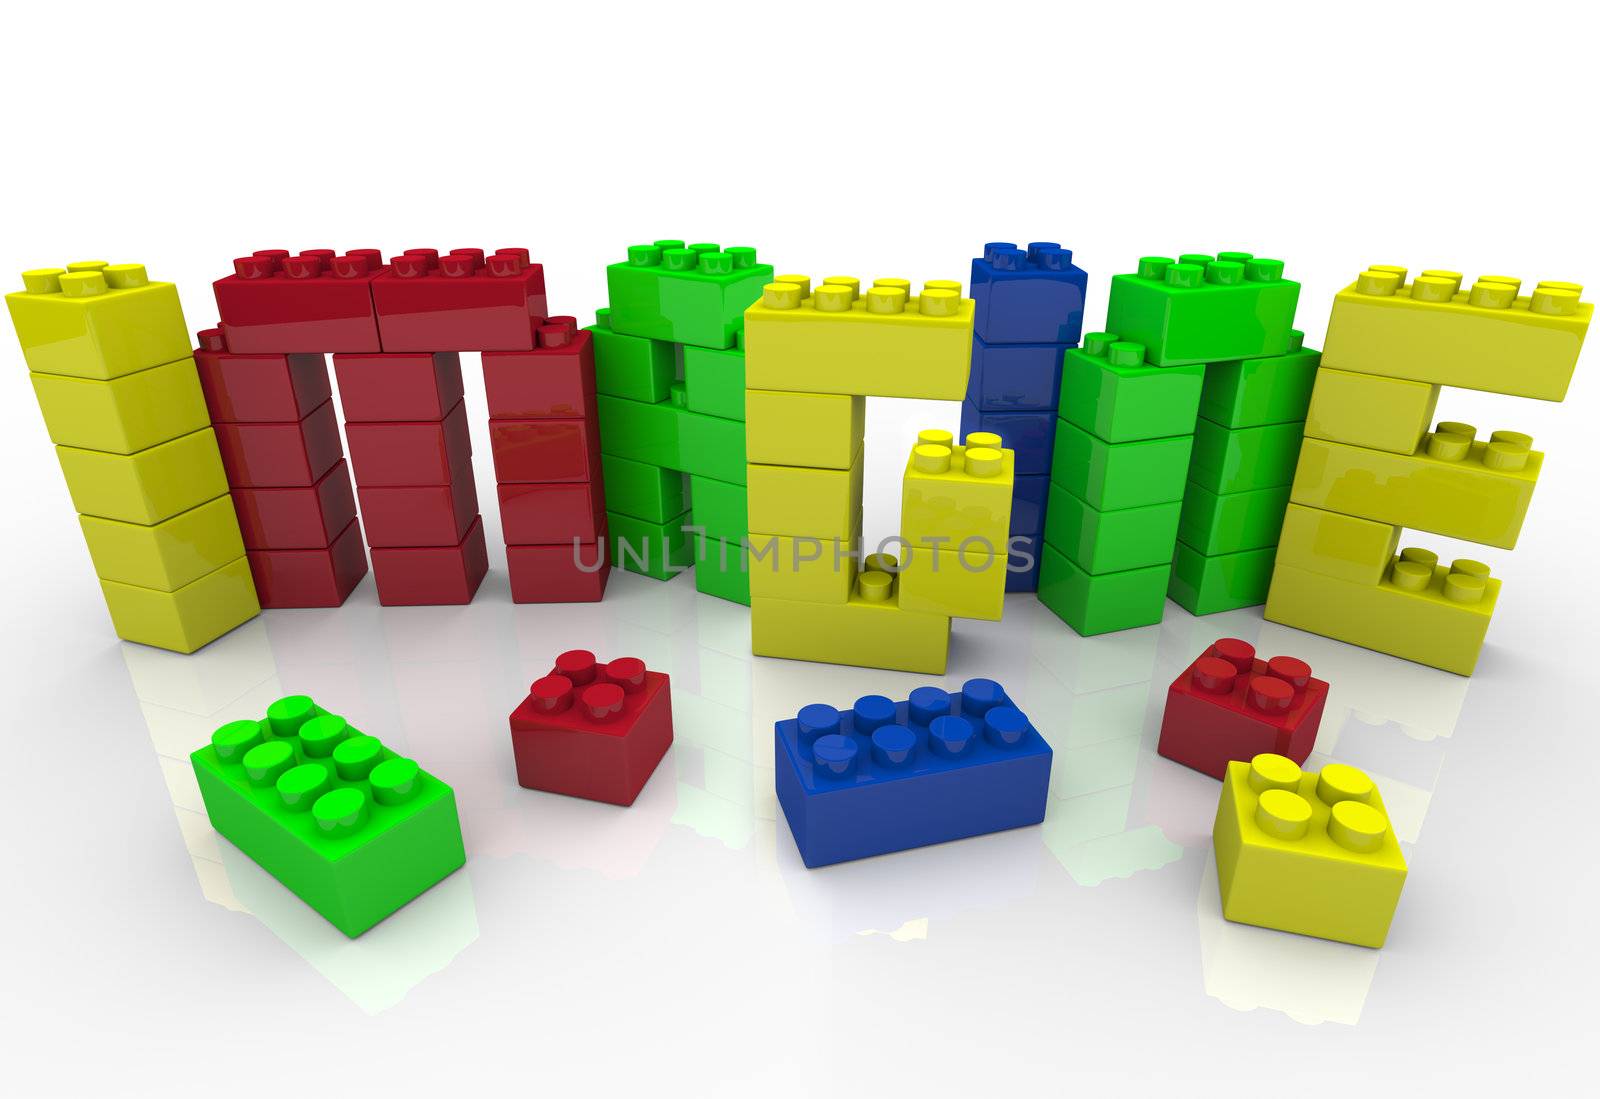 Imagine Word in Toy Plastic Blocks Idea Creativity by iQoncept